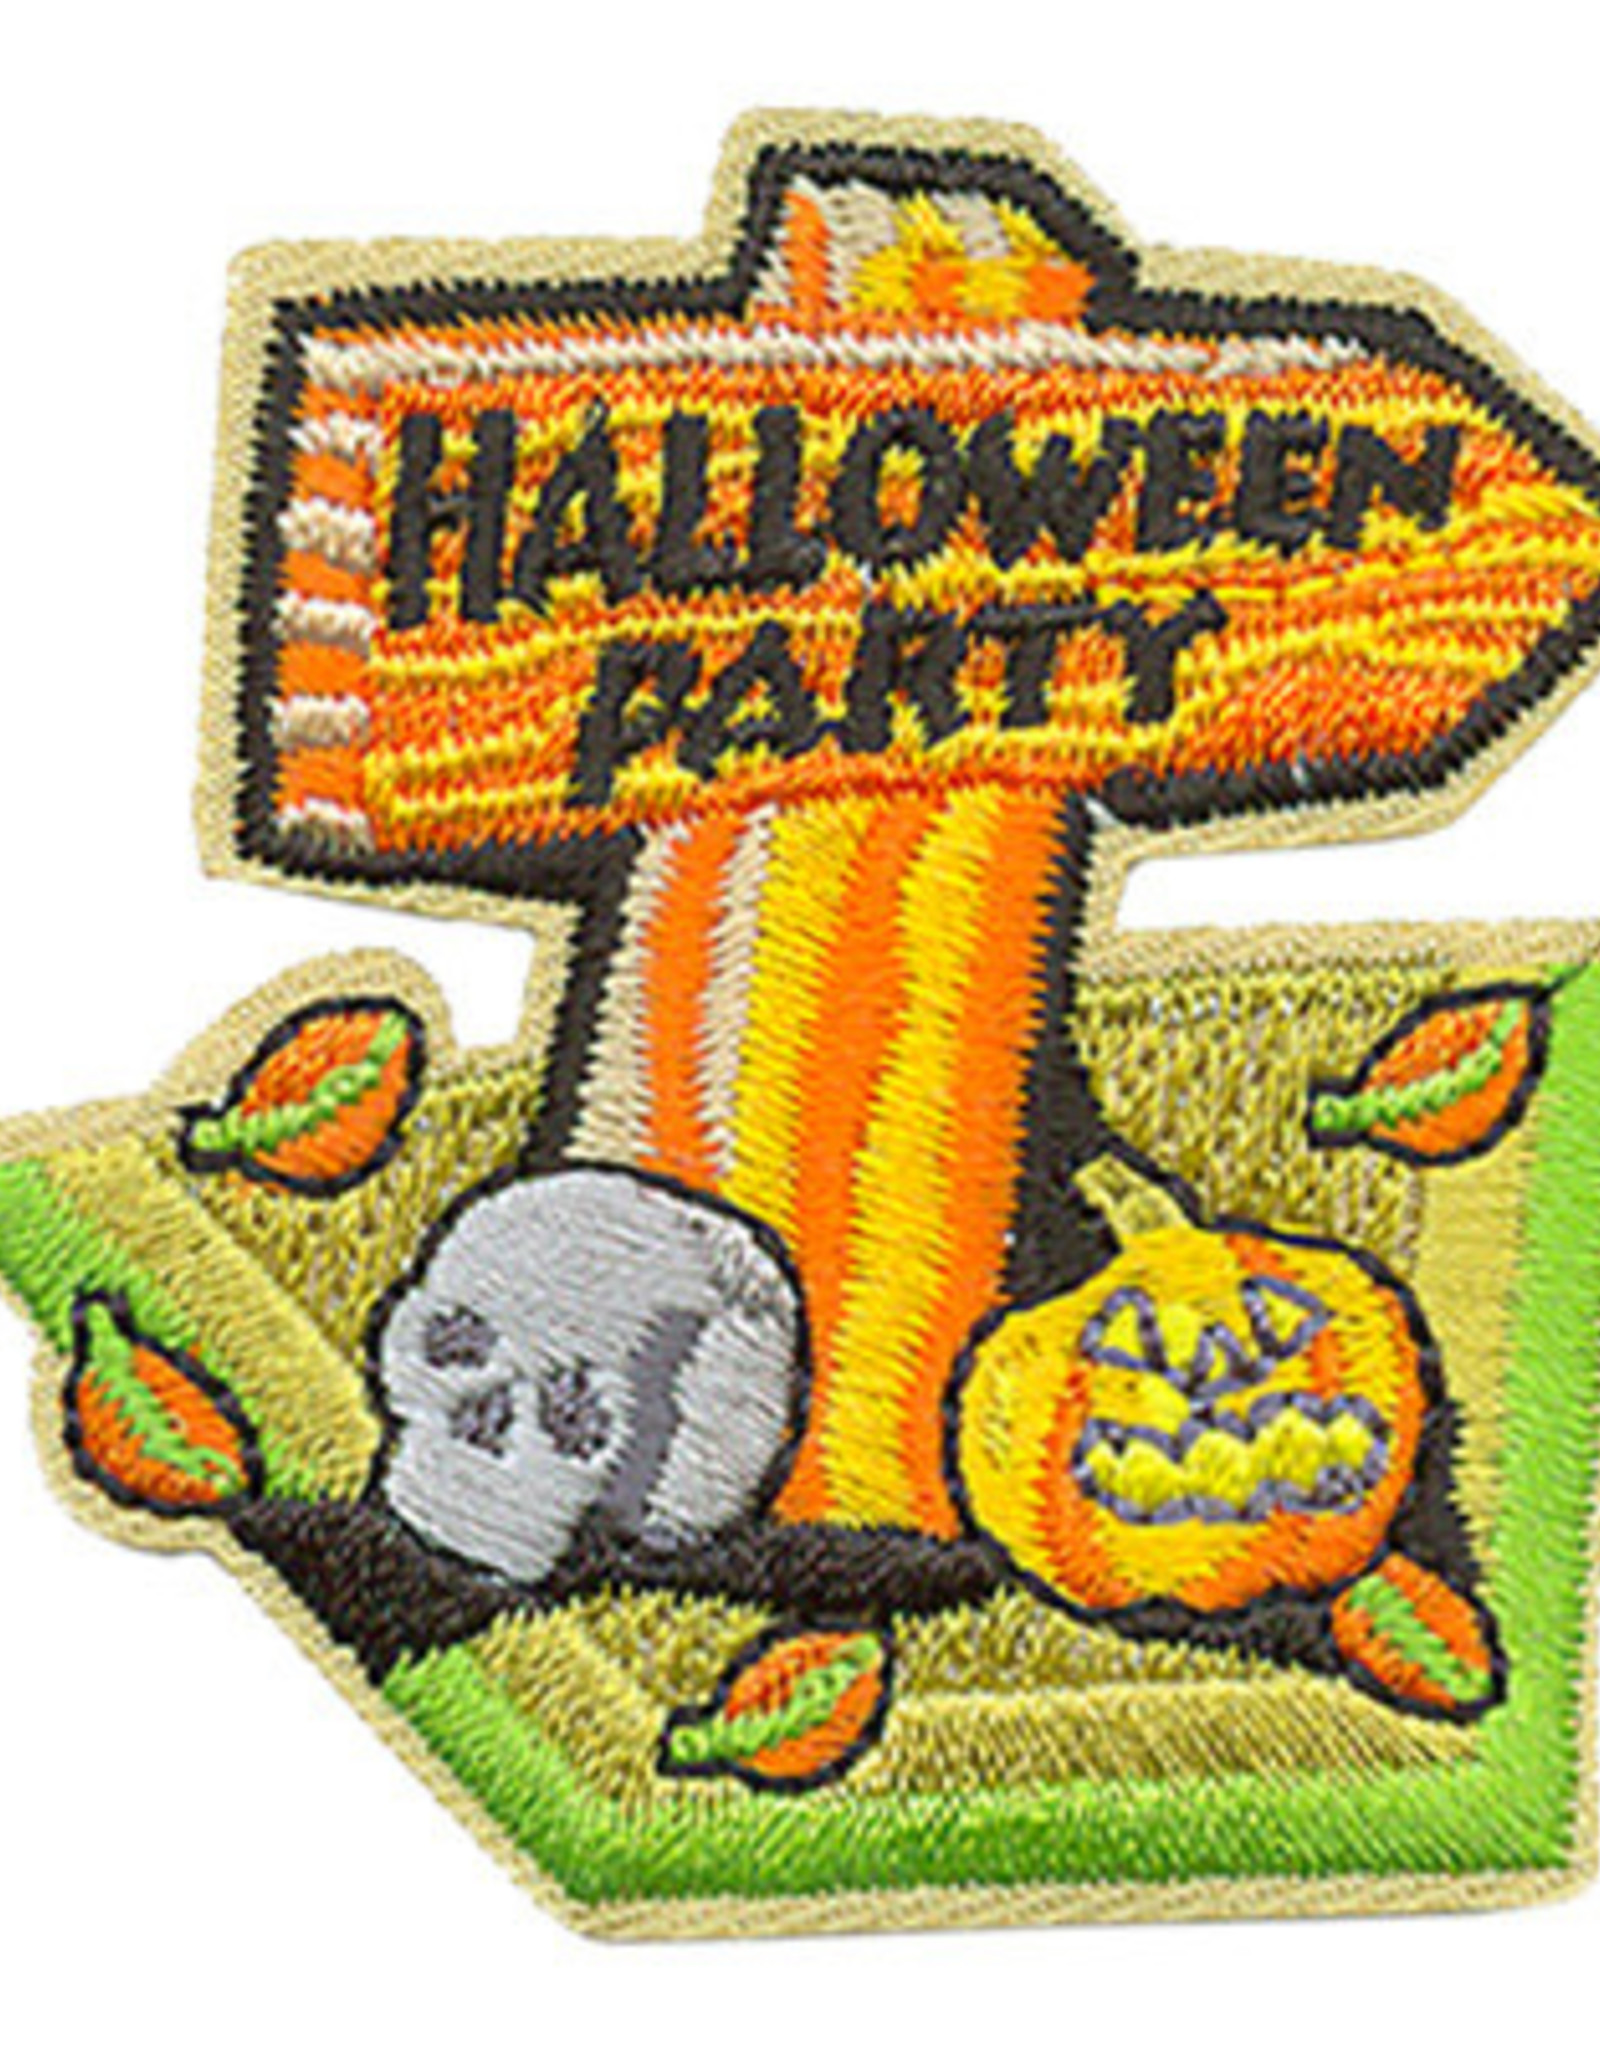 Advantage Emblem & Screen Prnt Halloween Party (Sign) Fun Patch